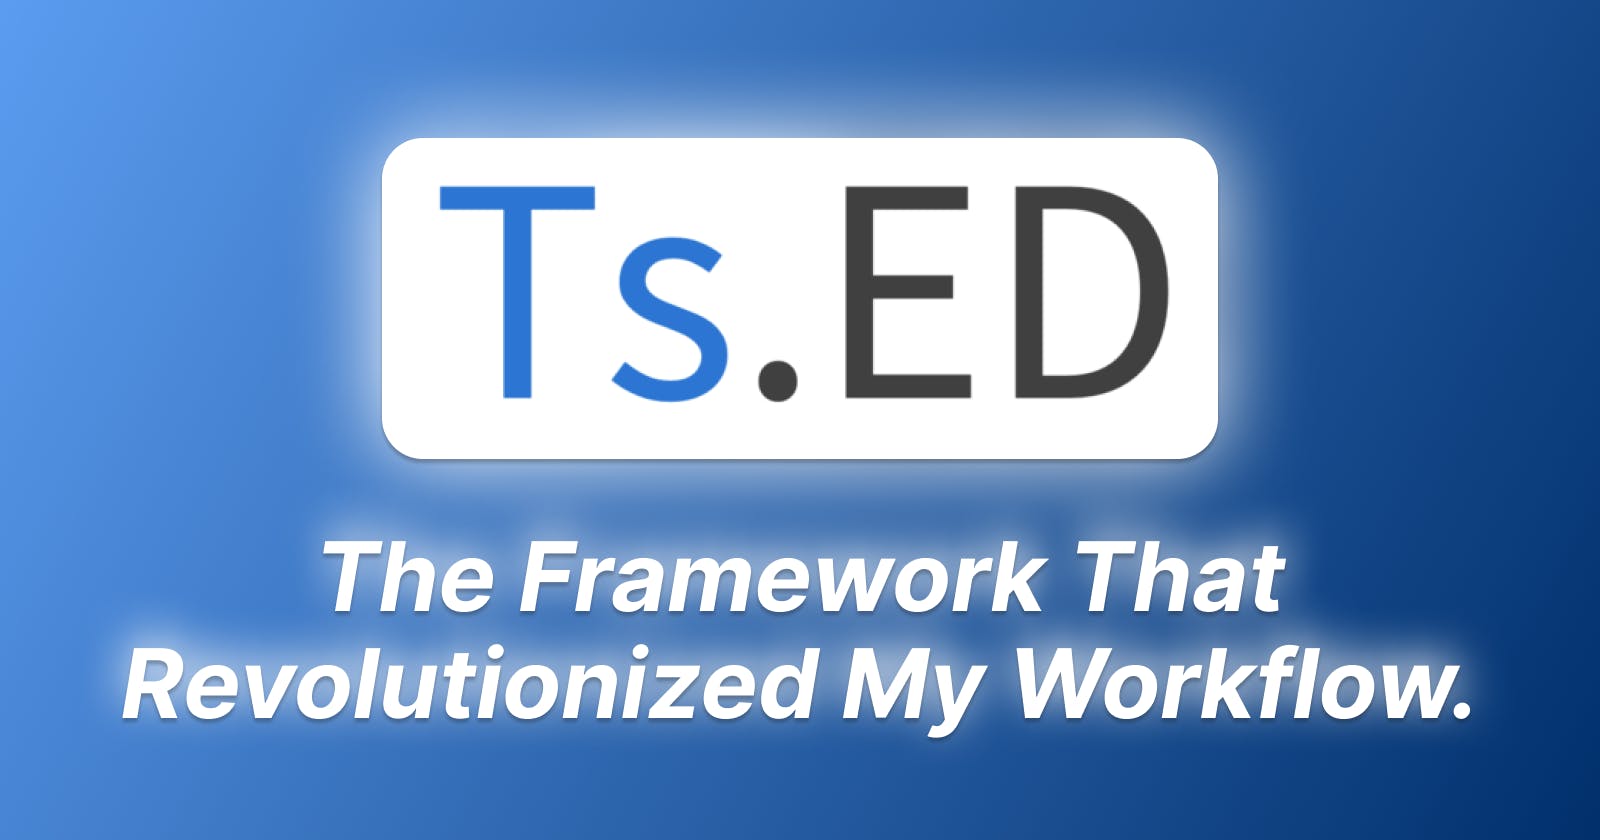 The framework that revolutionized my workflow.